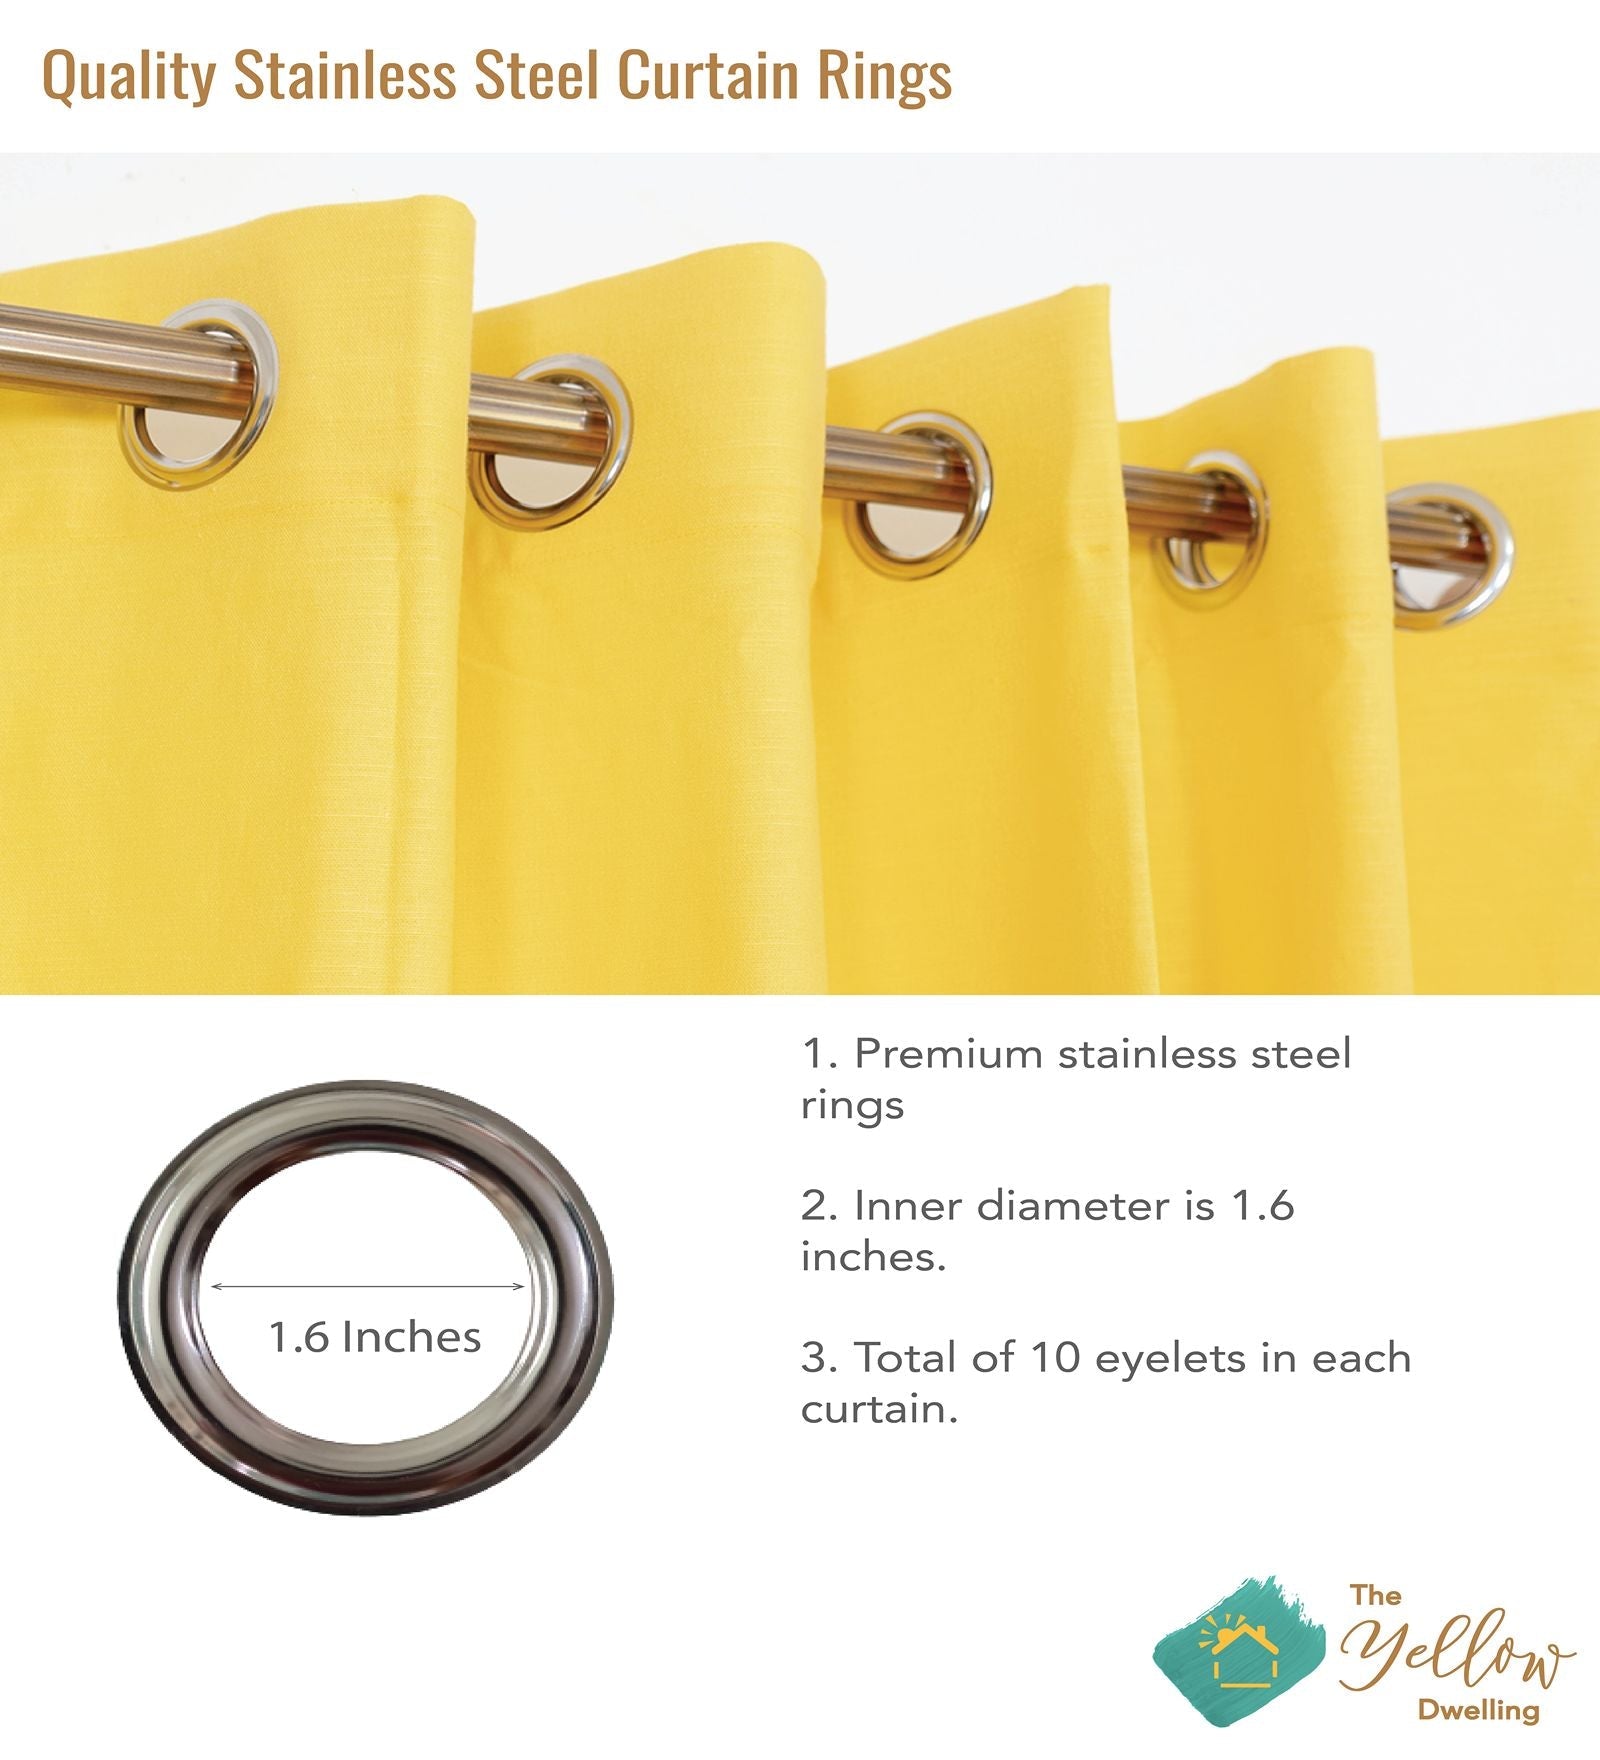 Solid Cotton Curtain - Mustard